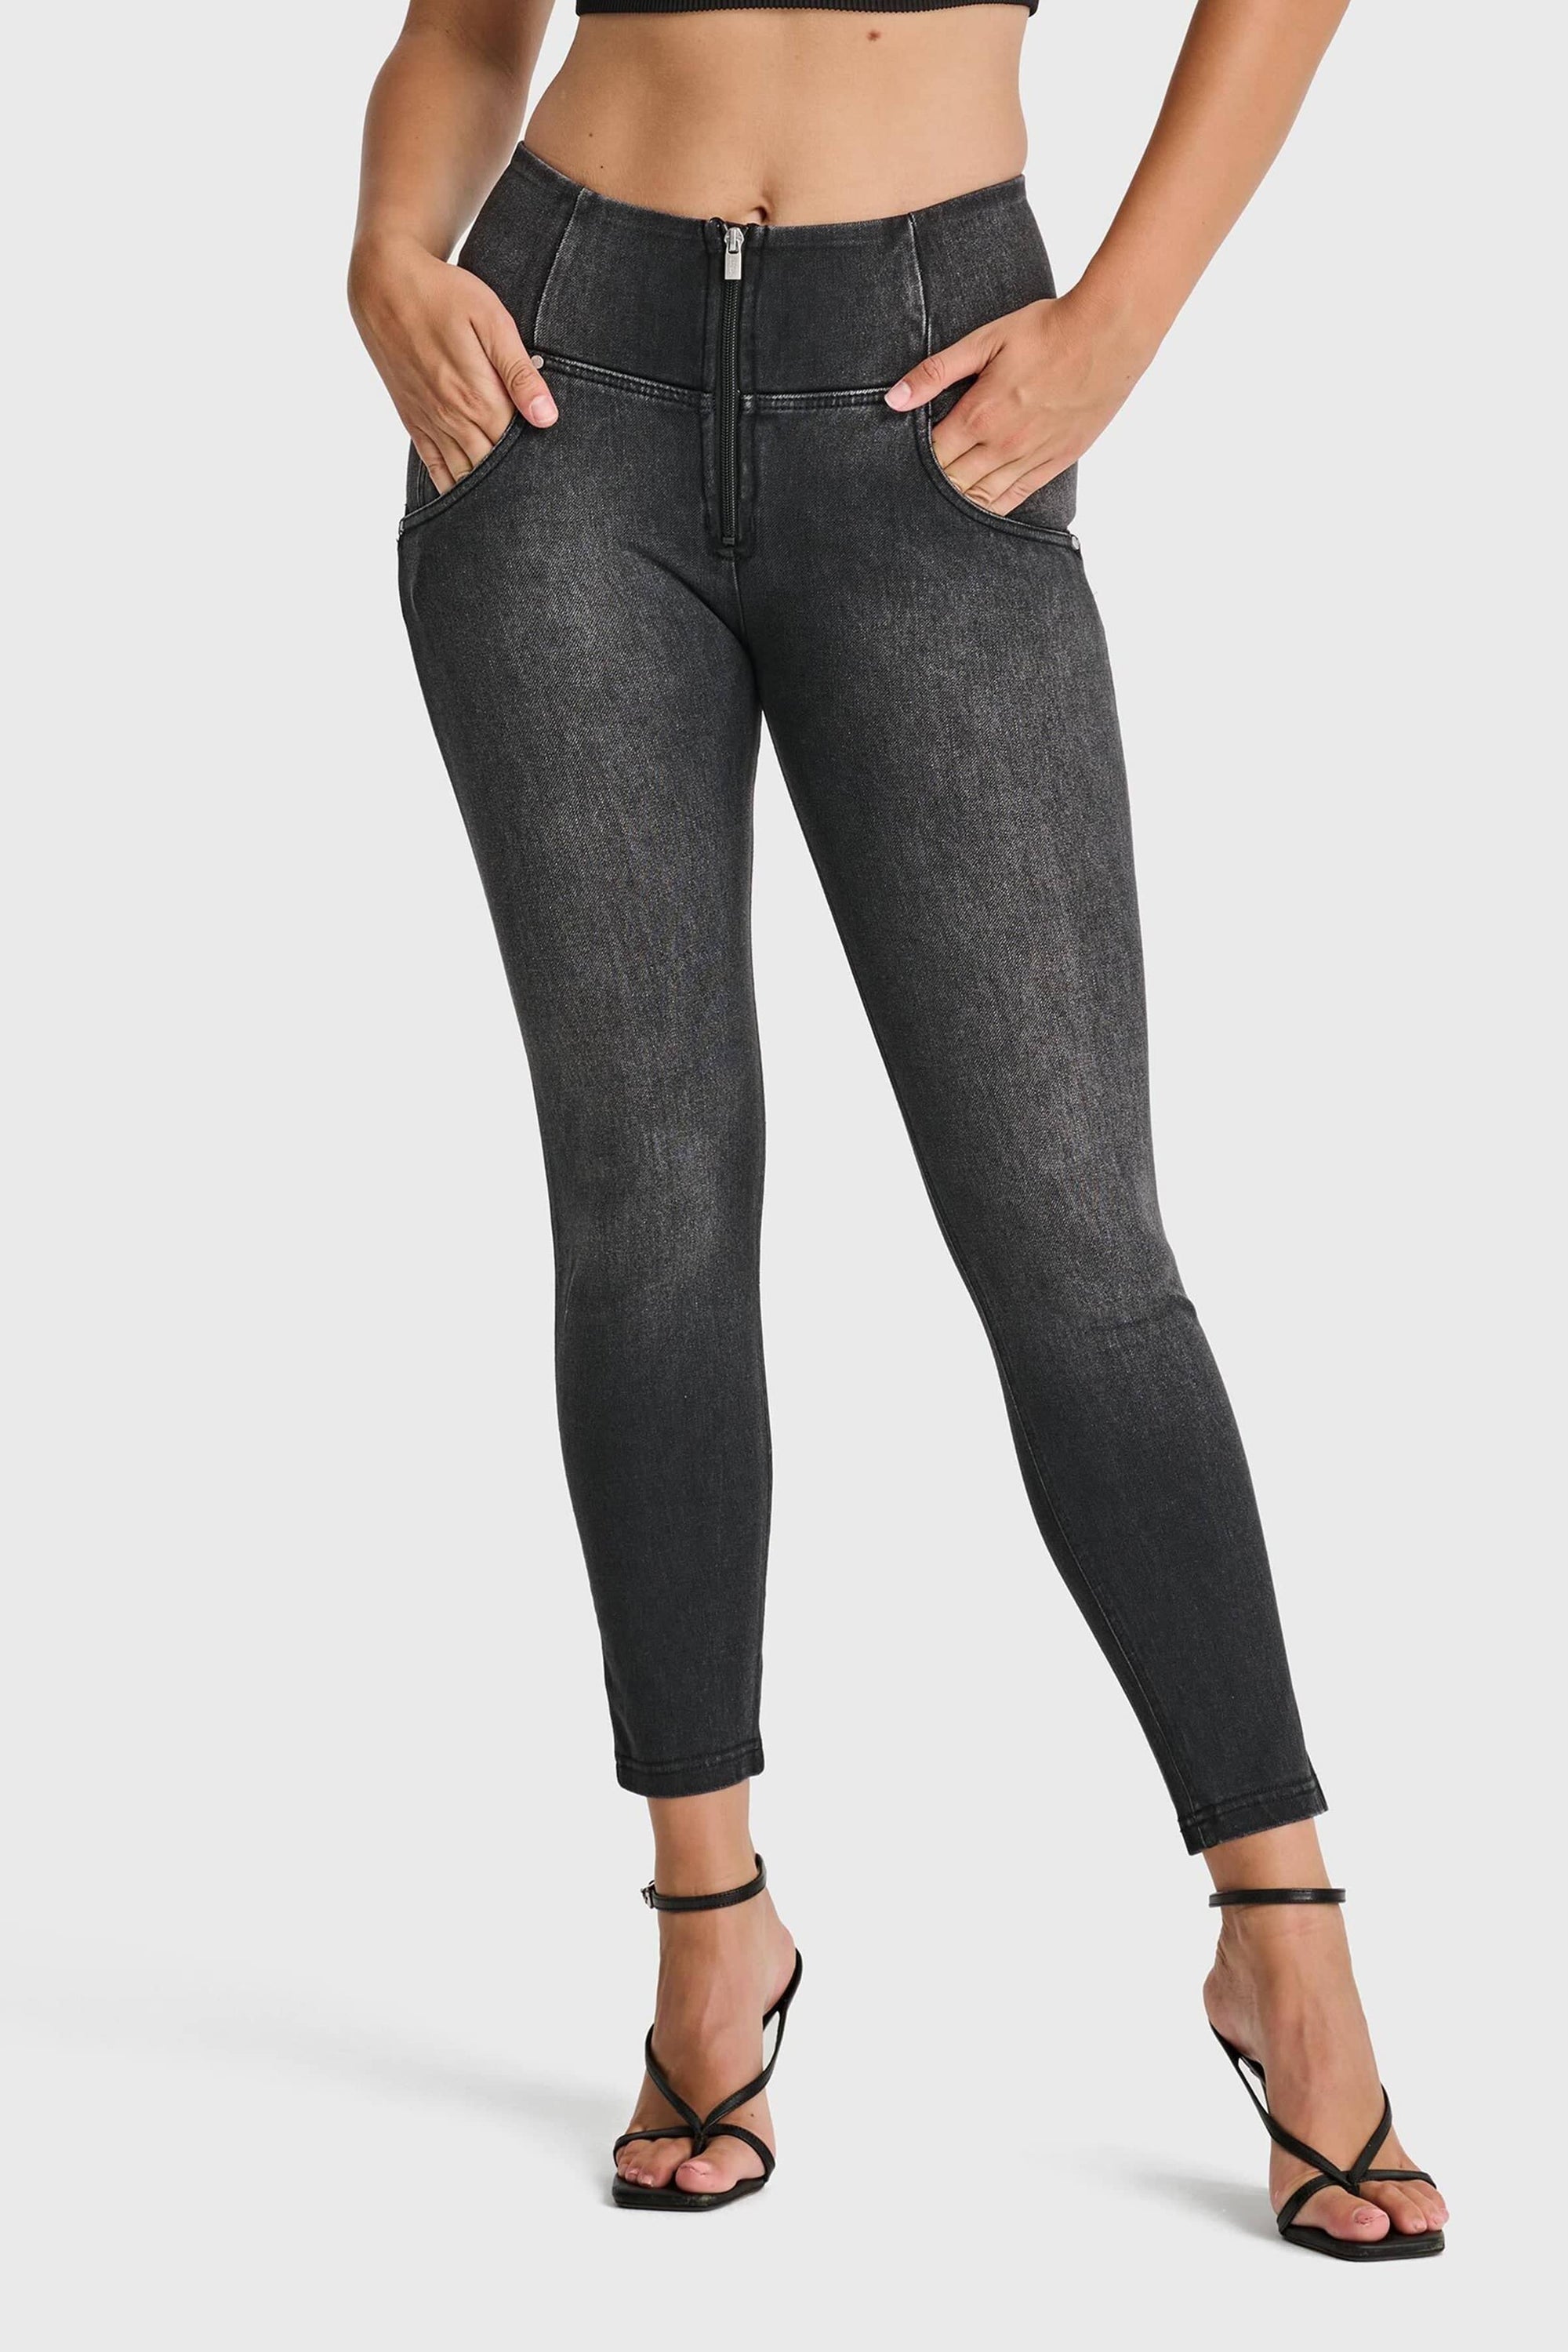 WR.UP® Snug Jeans - High Waisted - 7/8 Length - Black + Black Stitching 4